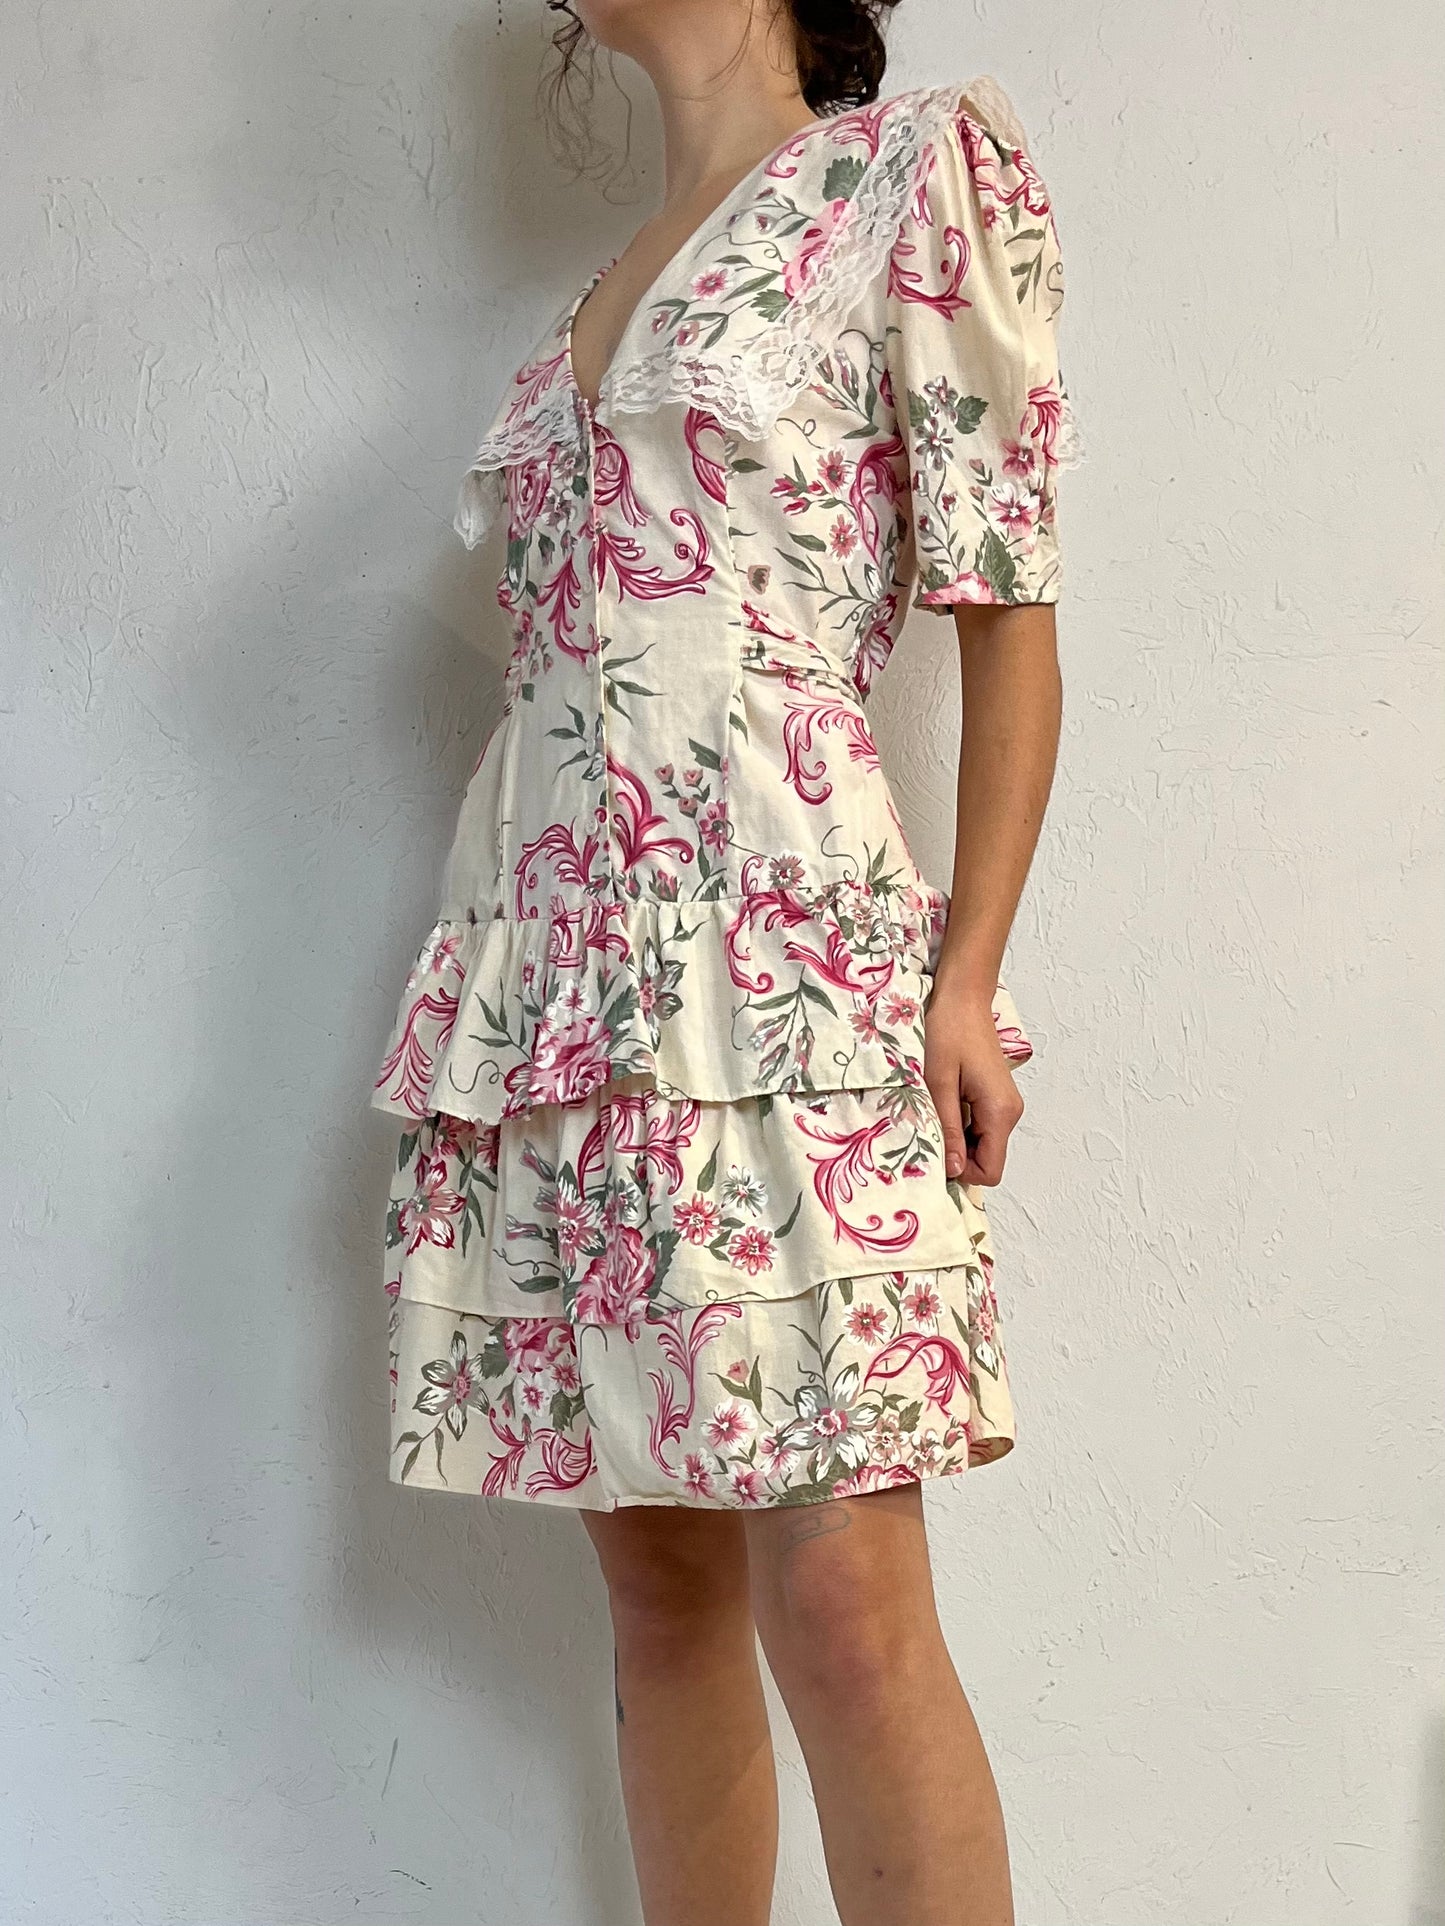 90s Floral Print Collared Cotton Mini Dress / Medium